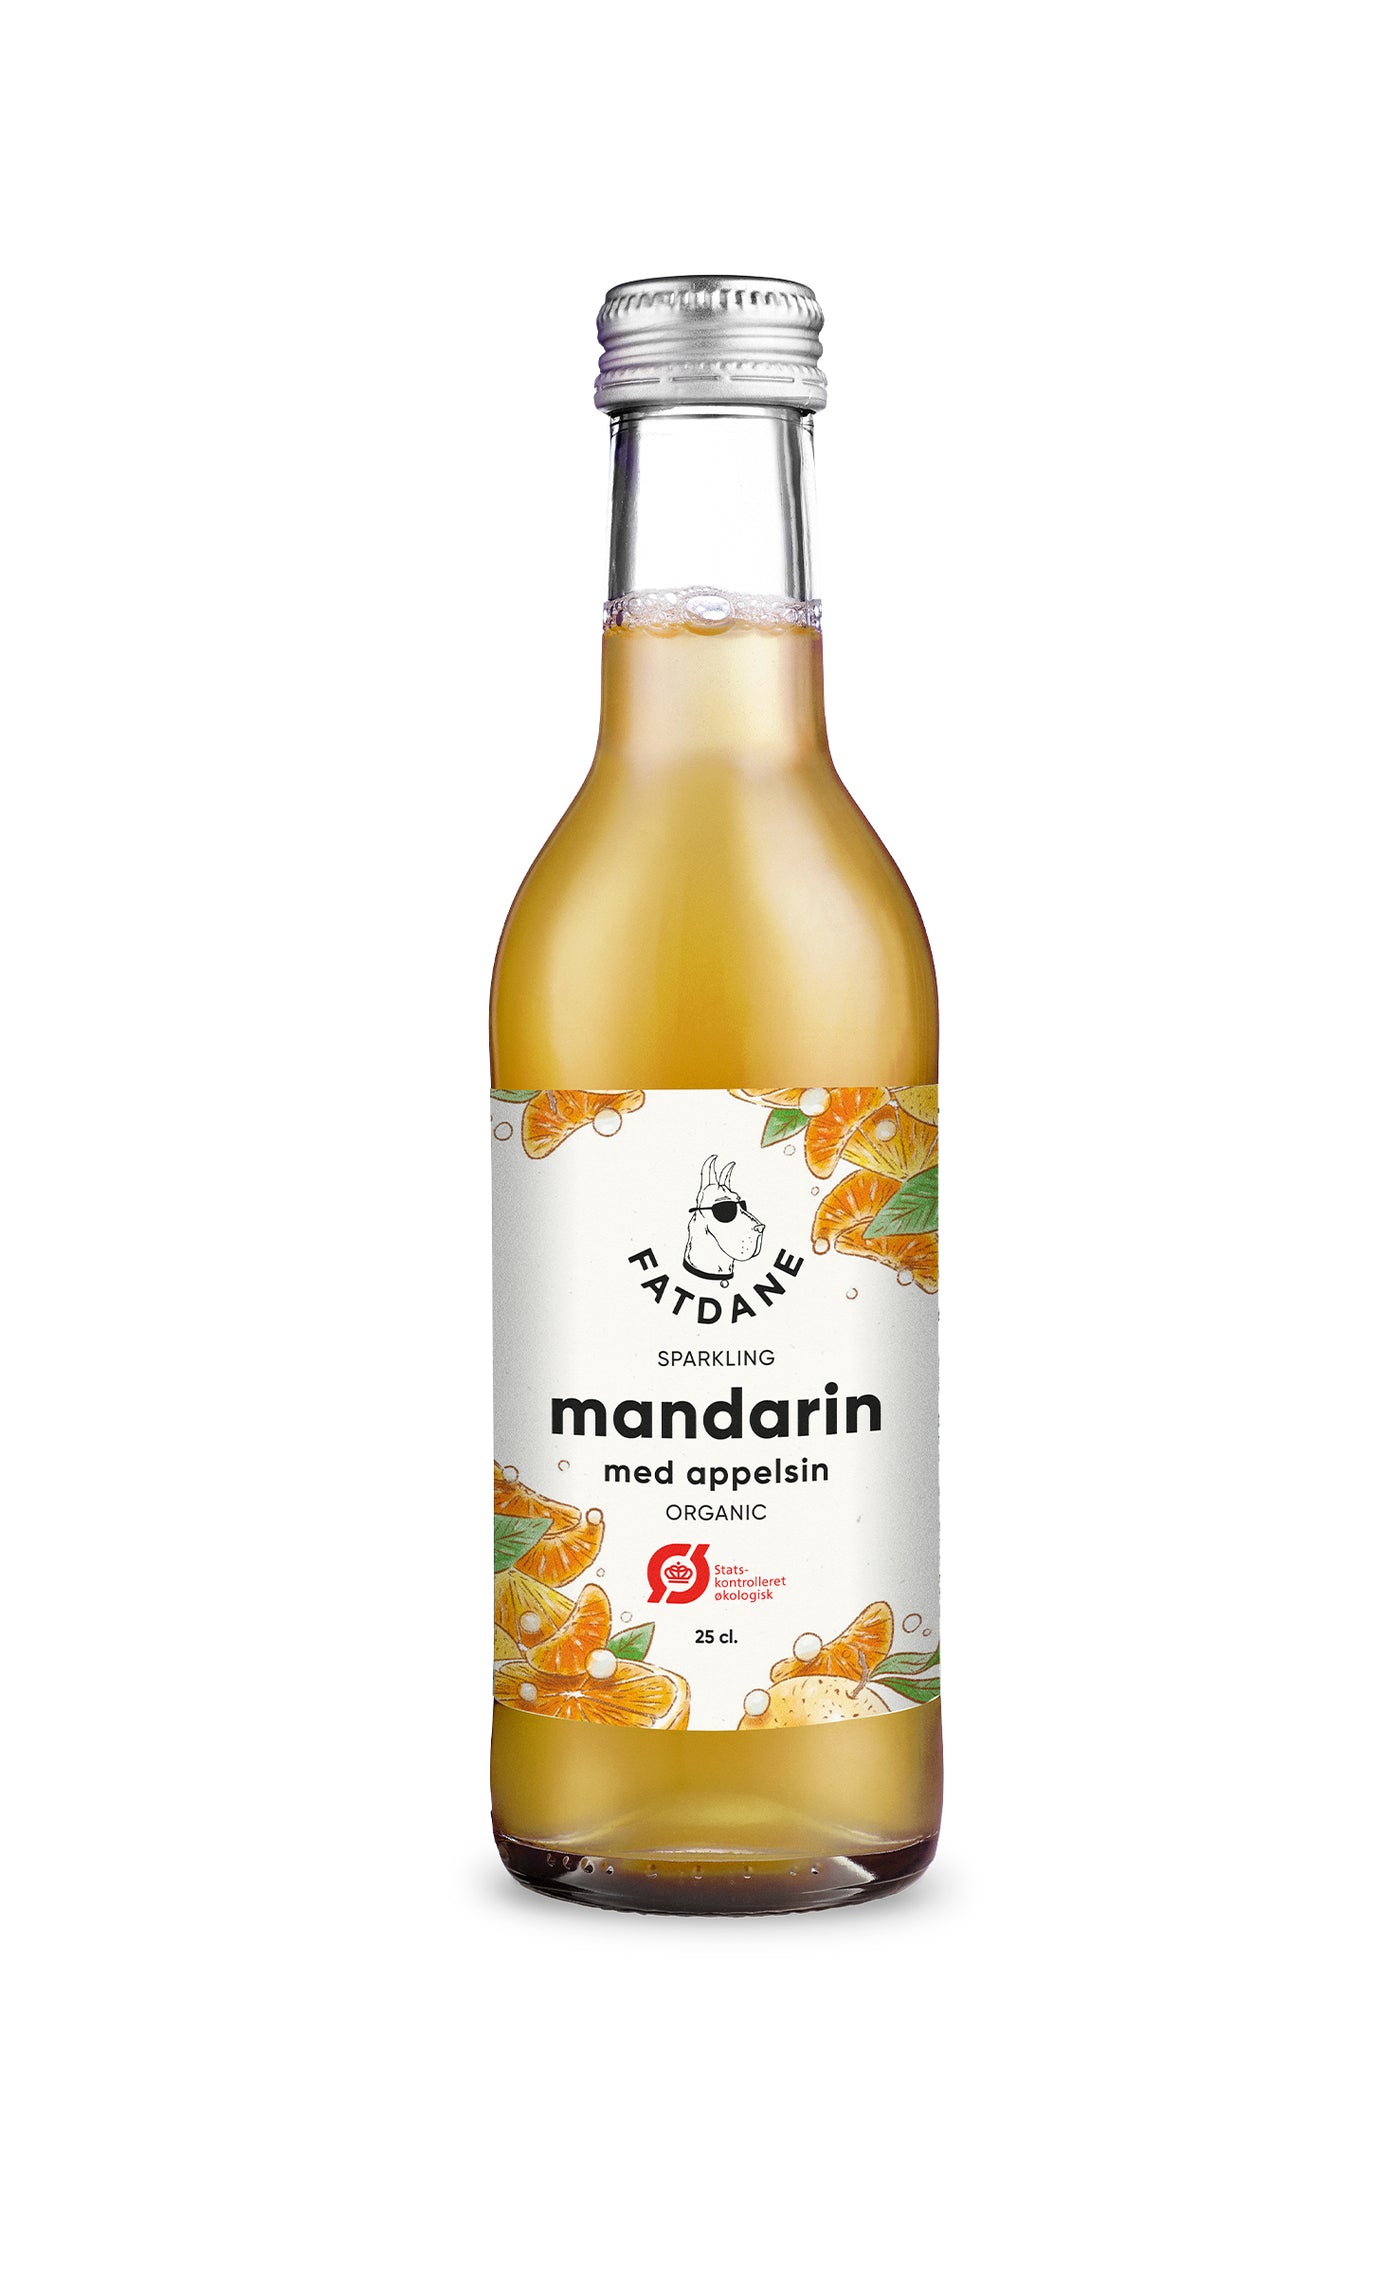 Fatdane Mandarin with Orange, 25 cl.